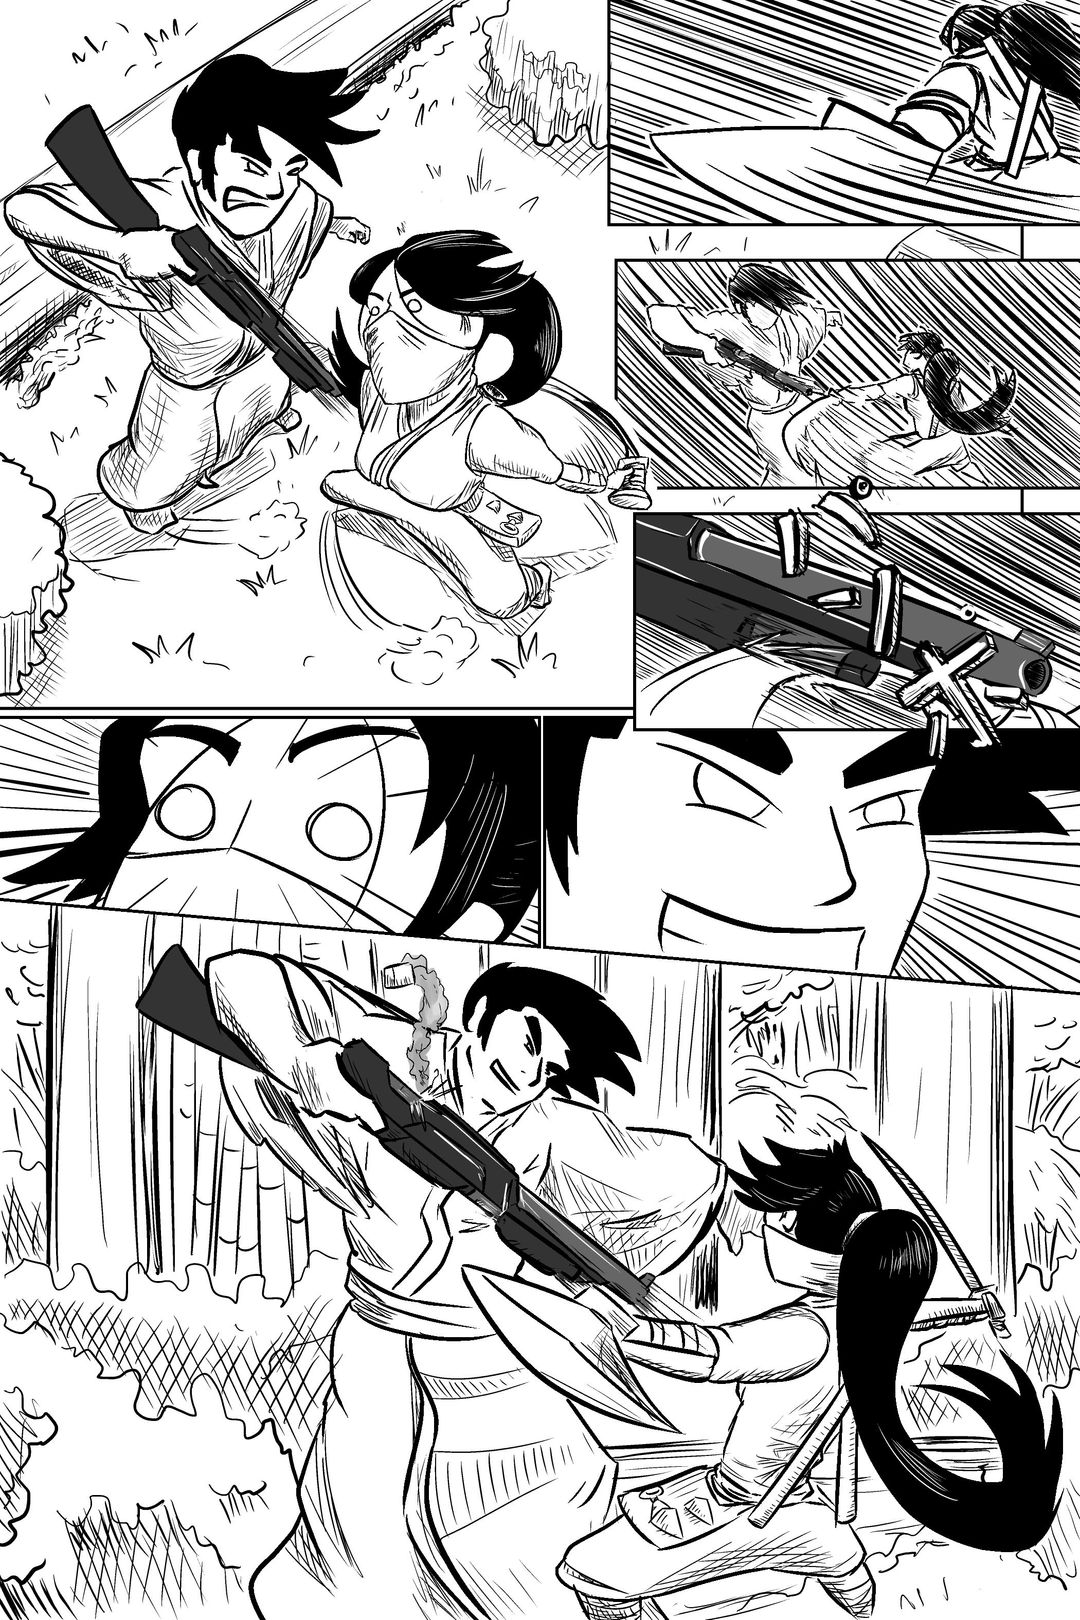 Shotgun Samurai 04 panel 2